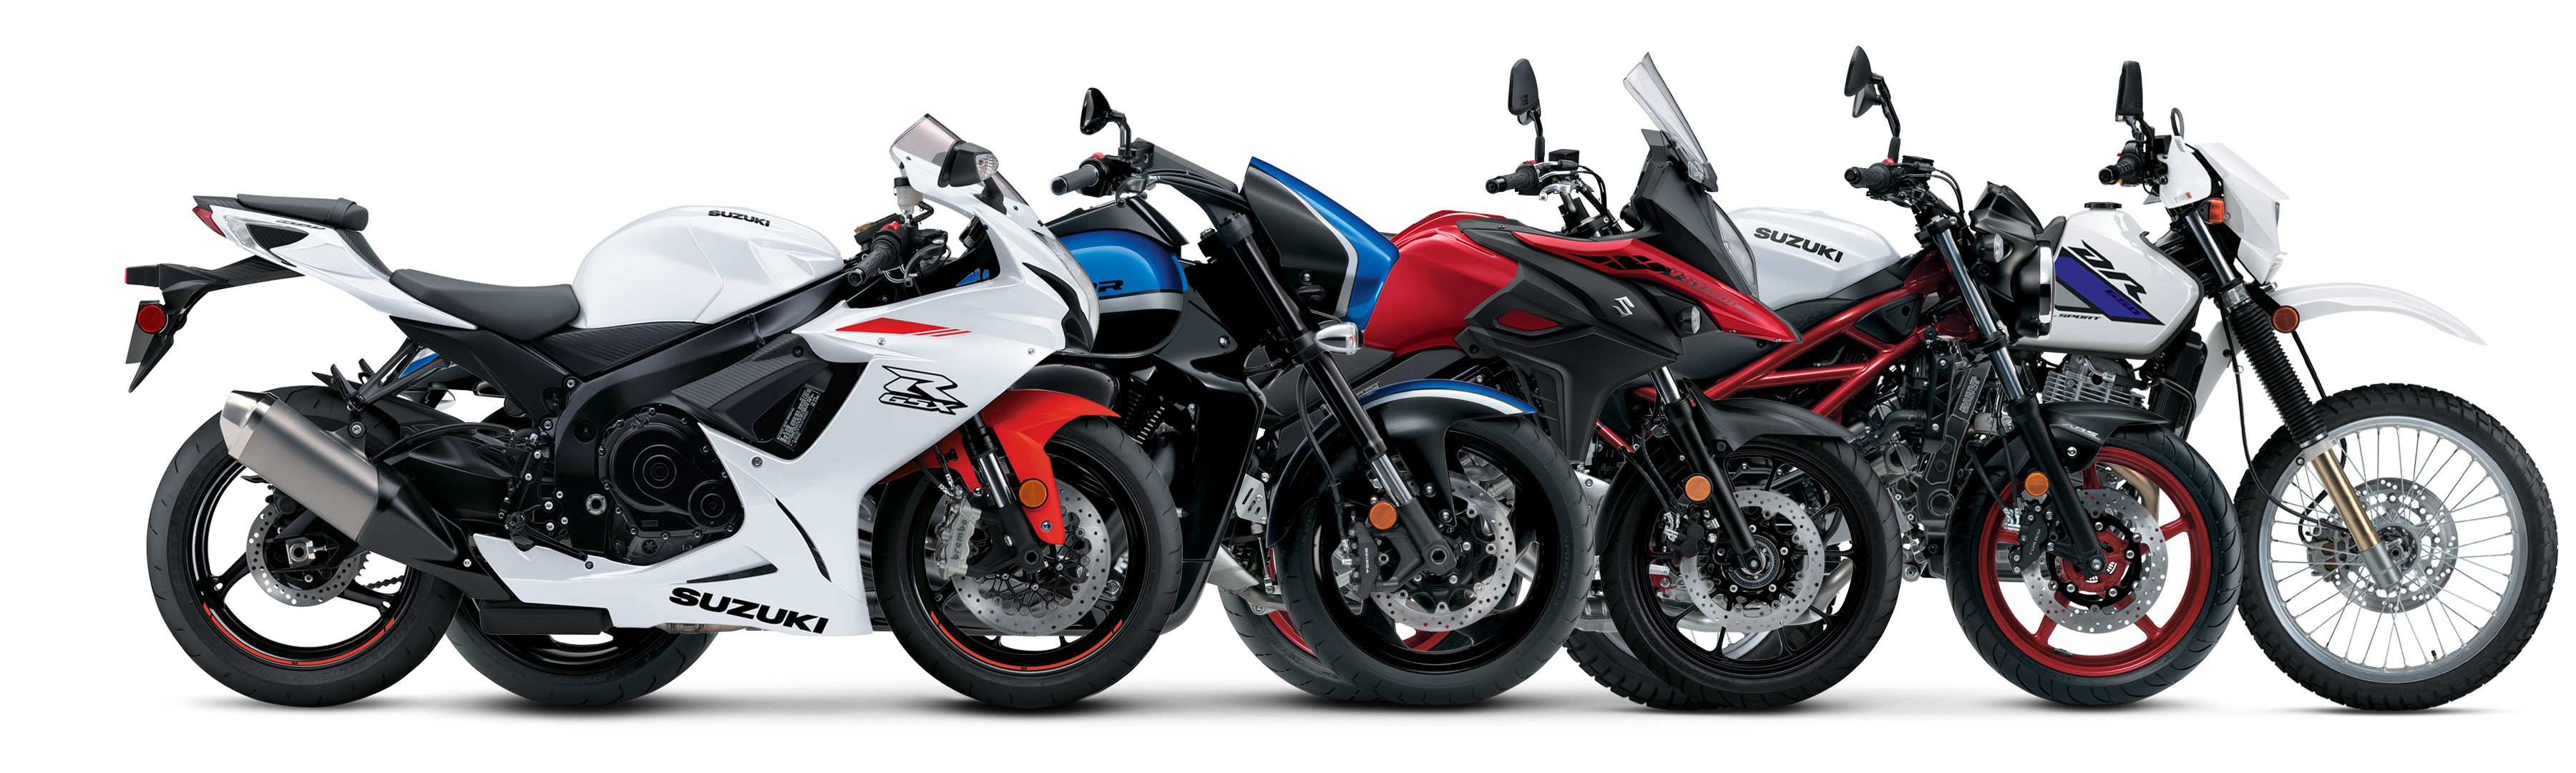 Suzuki Cycles Suzuki Announces Its Remaining 21 Motorcycle Lineup